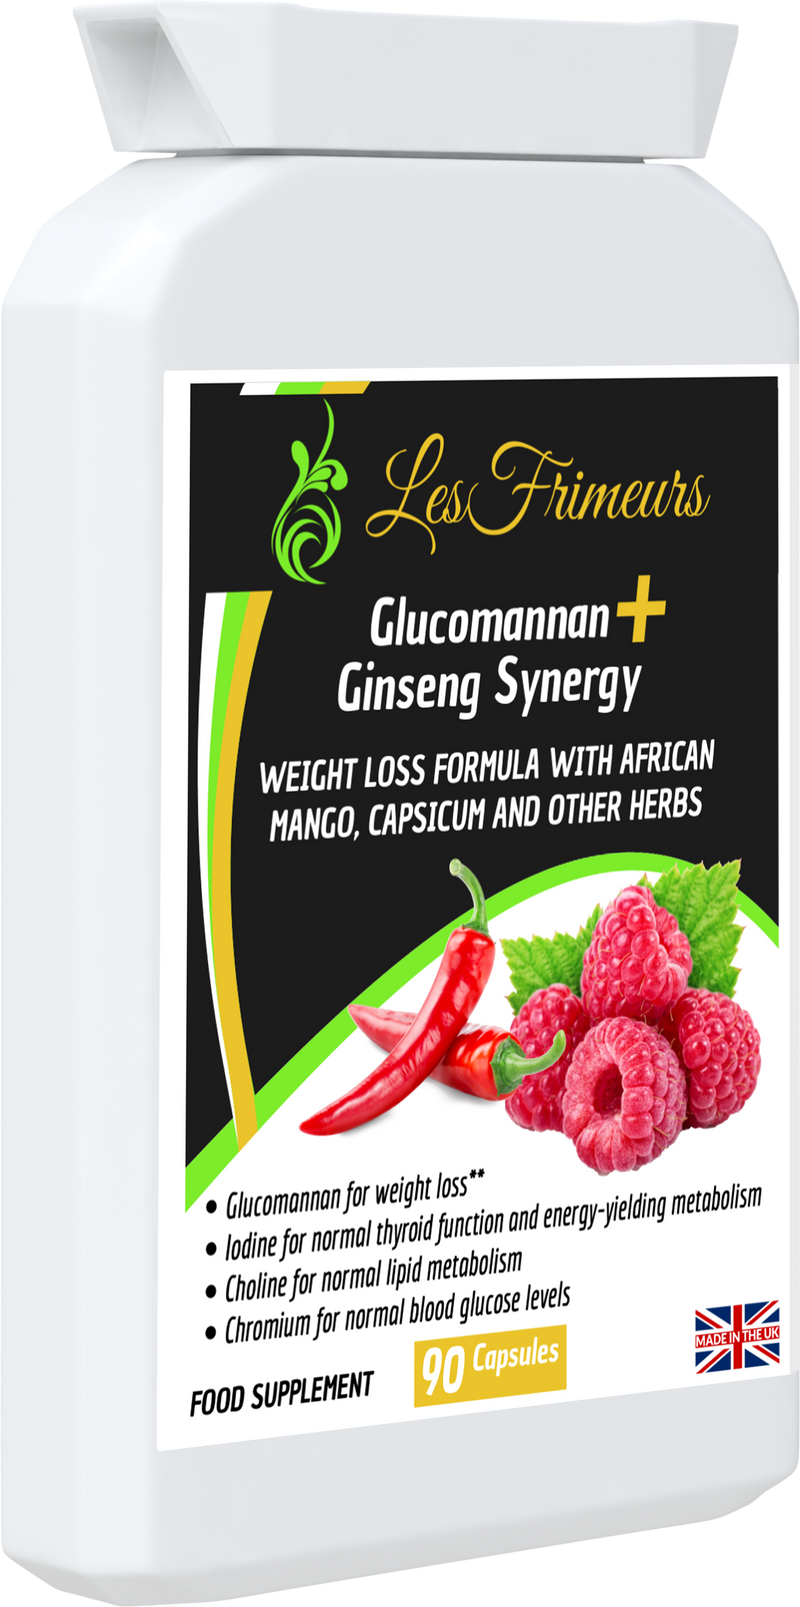 Glucomannan + Ginseng Synergy